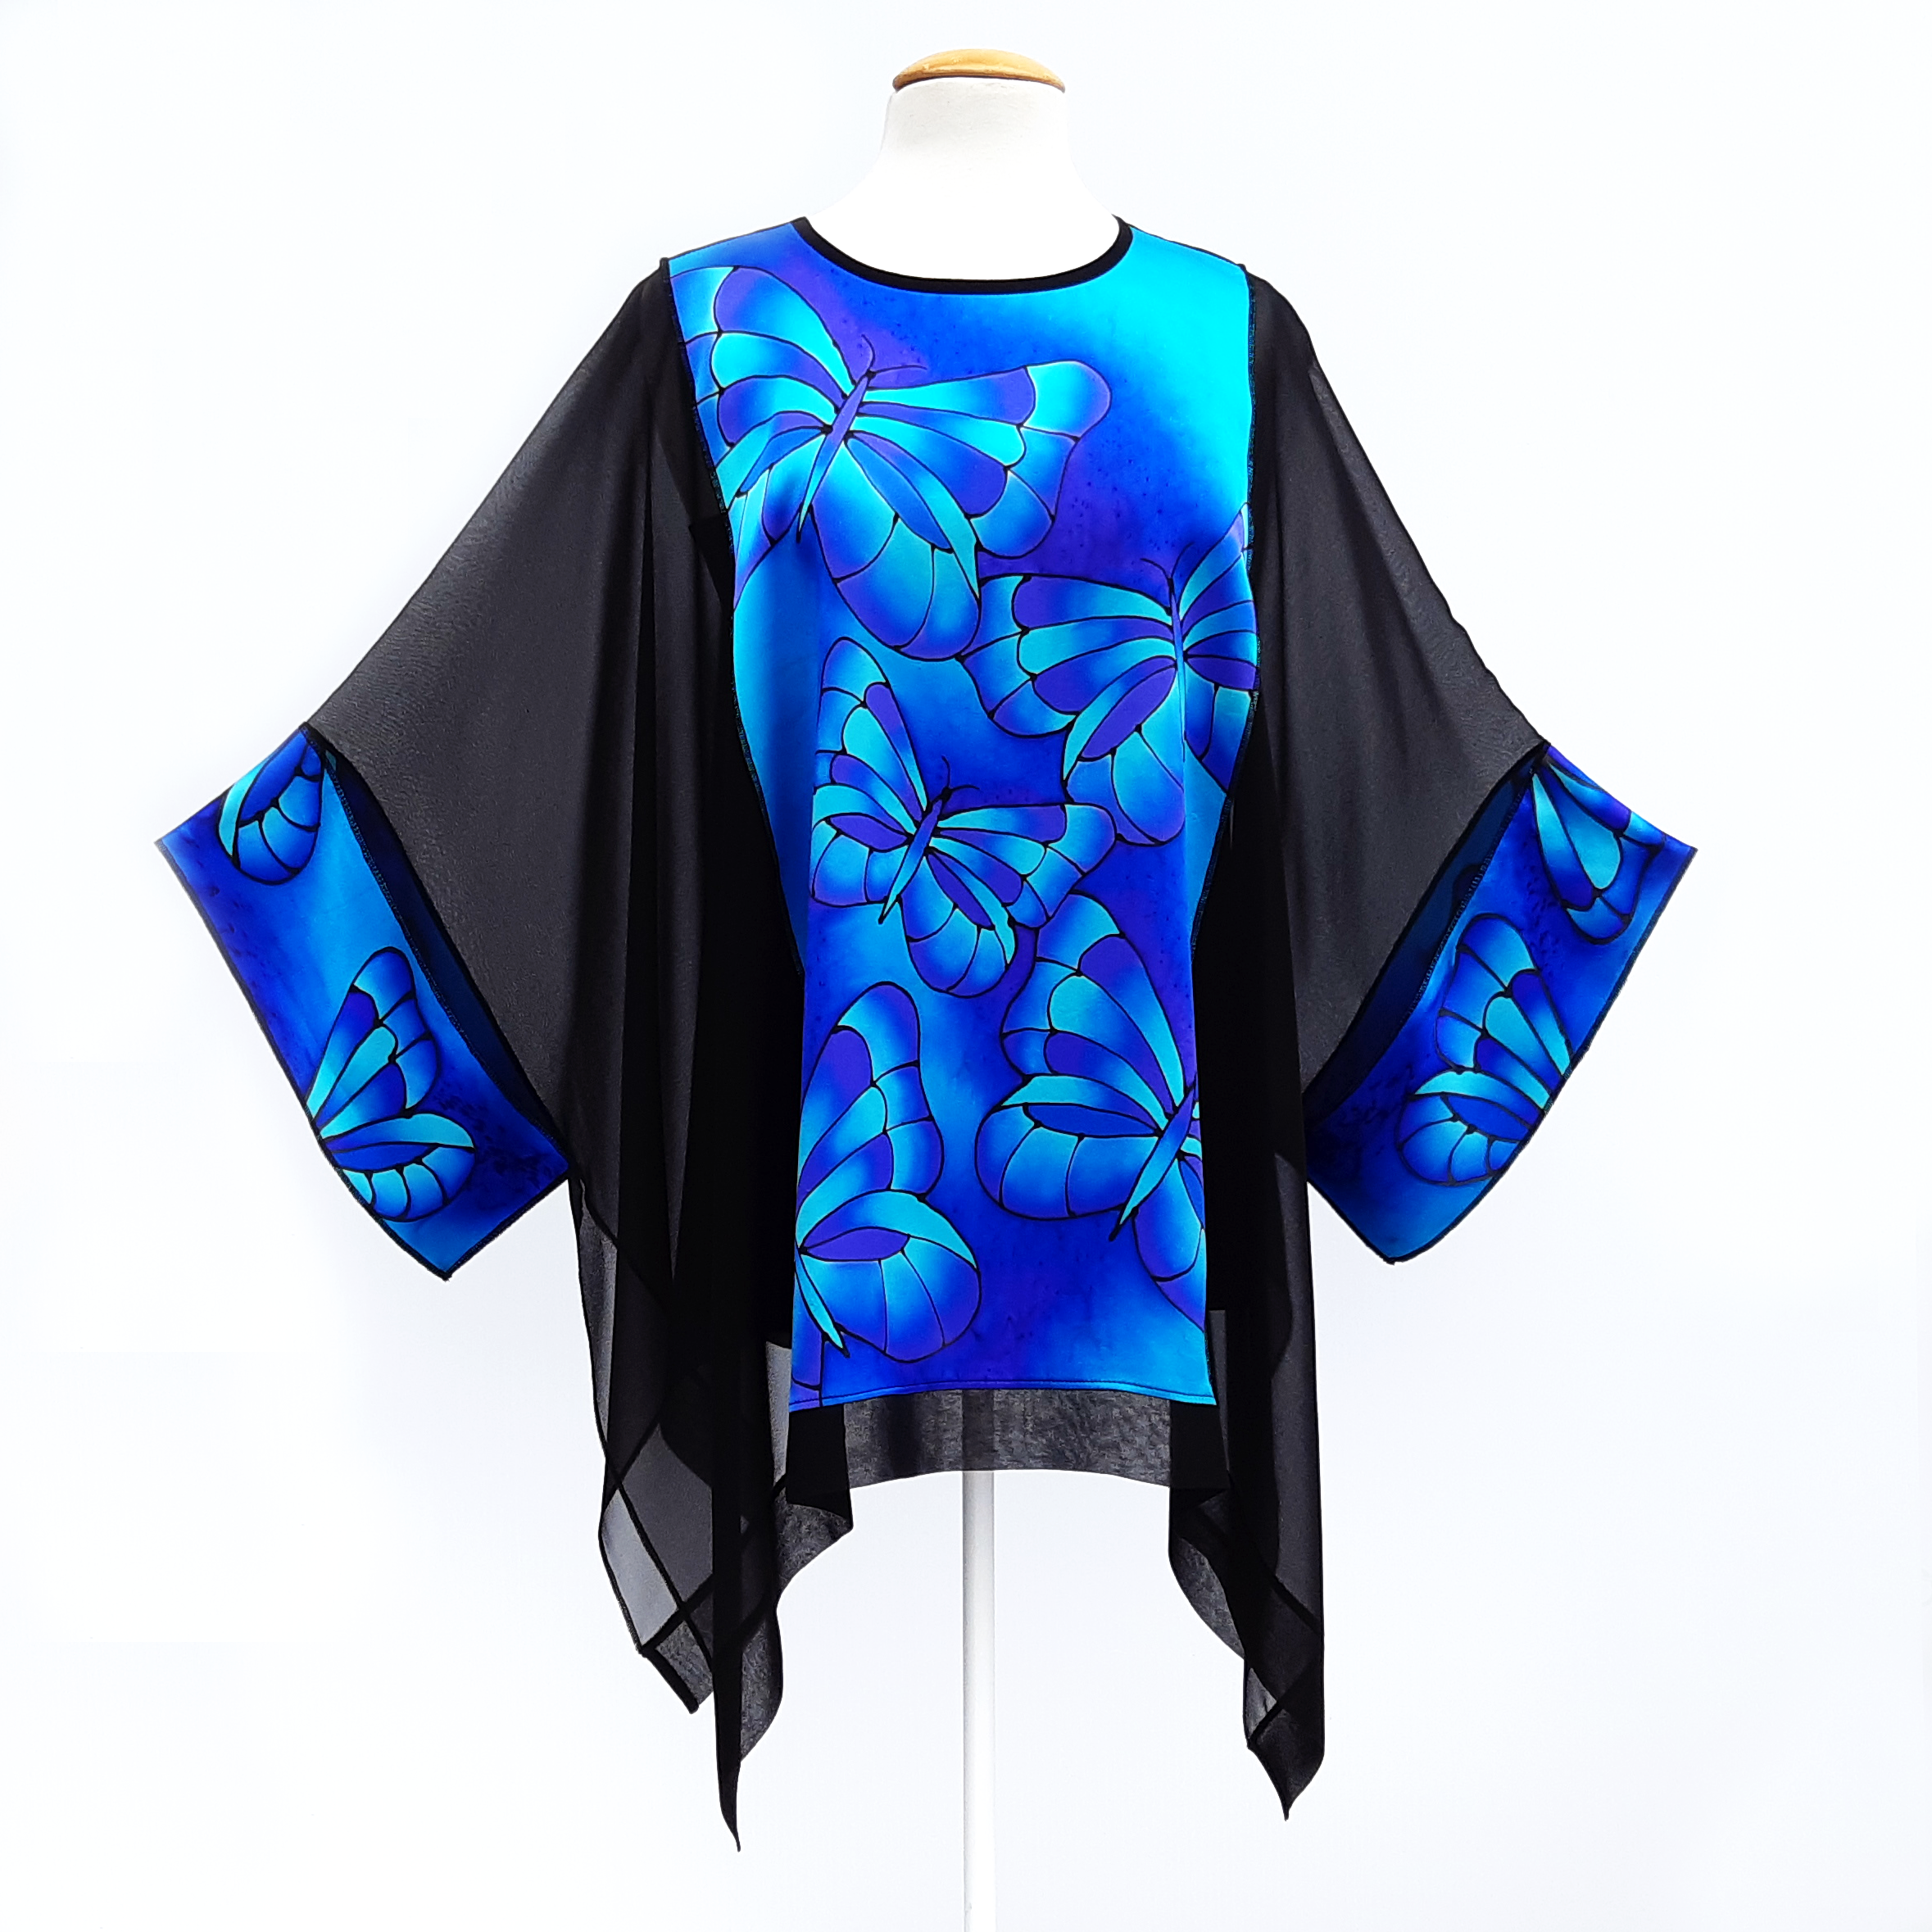 Giant blue morpho butterfly hand painted silk caftan top for ladies handmade by Lynne Kiel